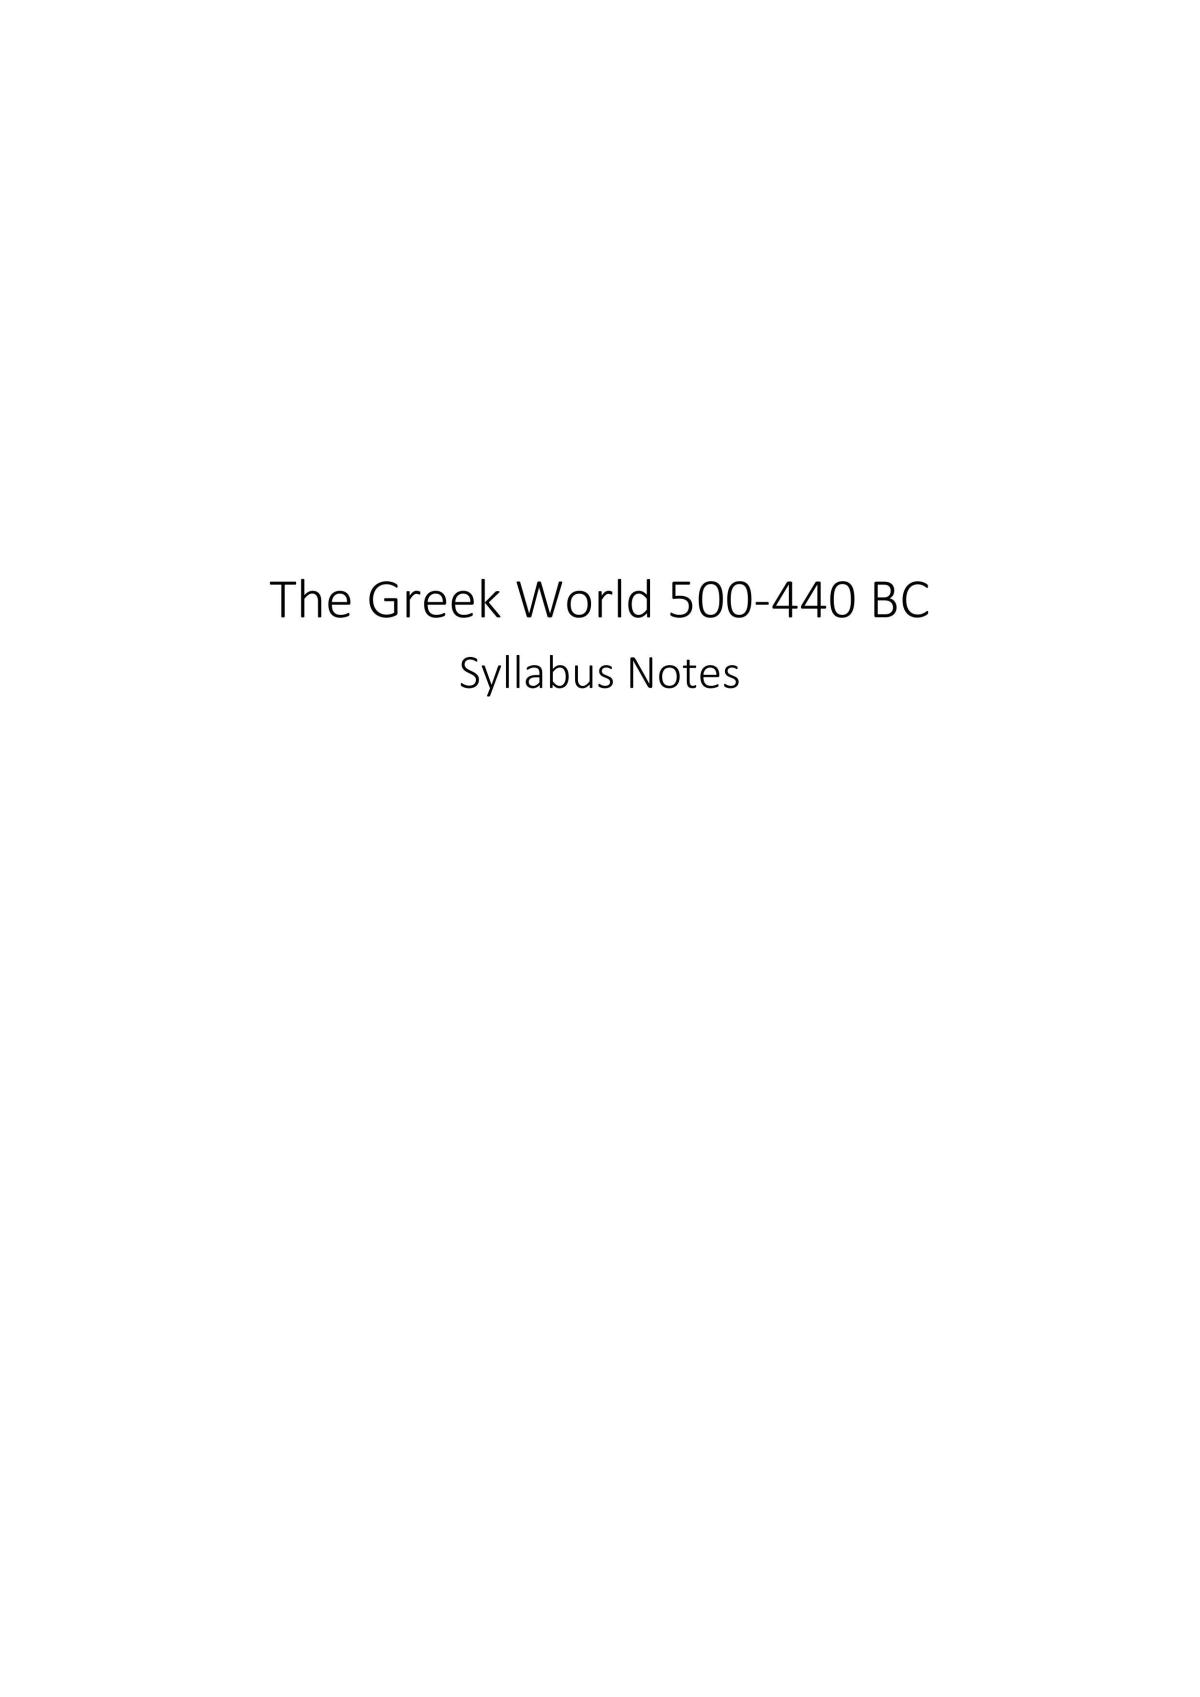 The Greek World 500-440 BC: Syllabus Notes - Page 1